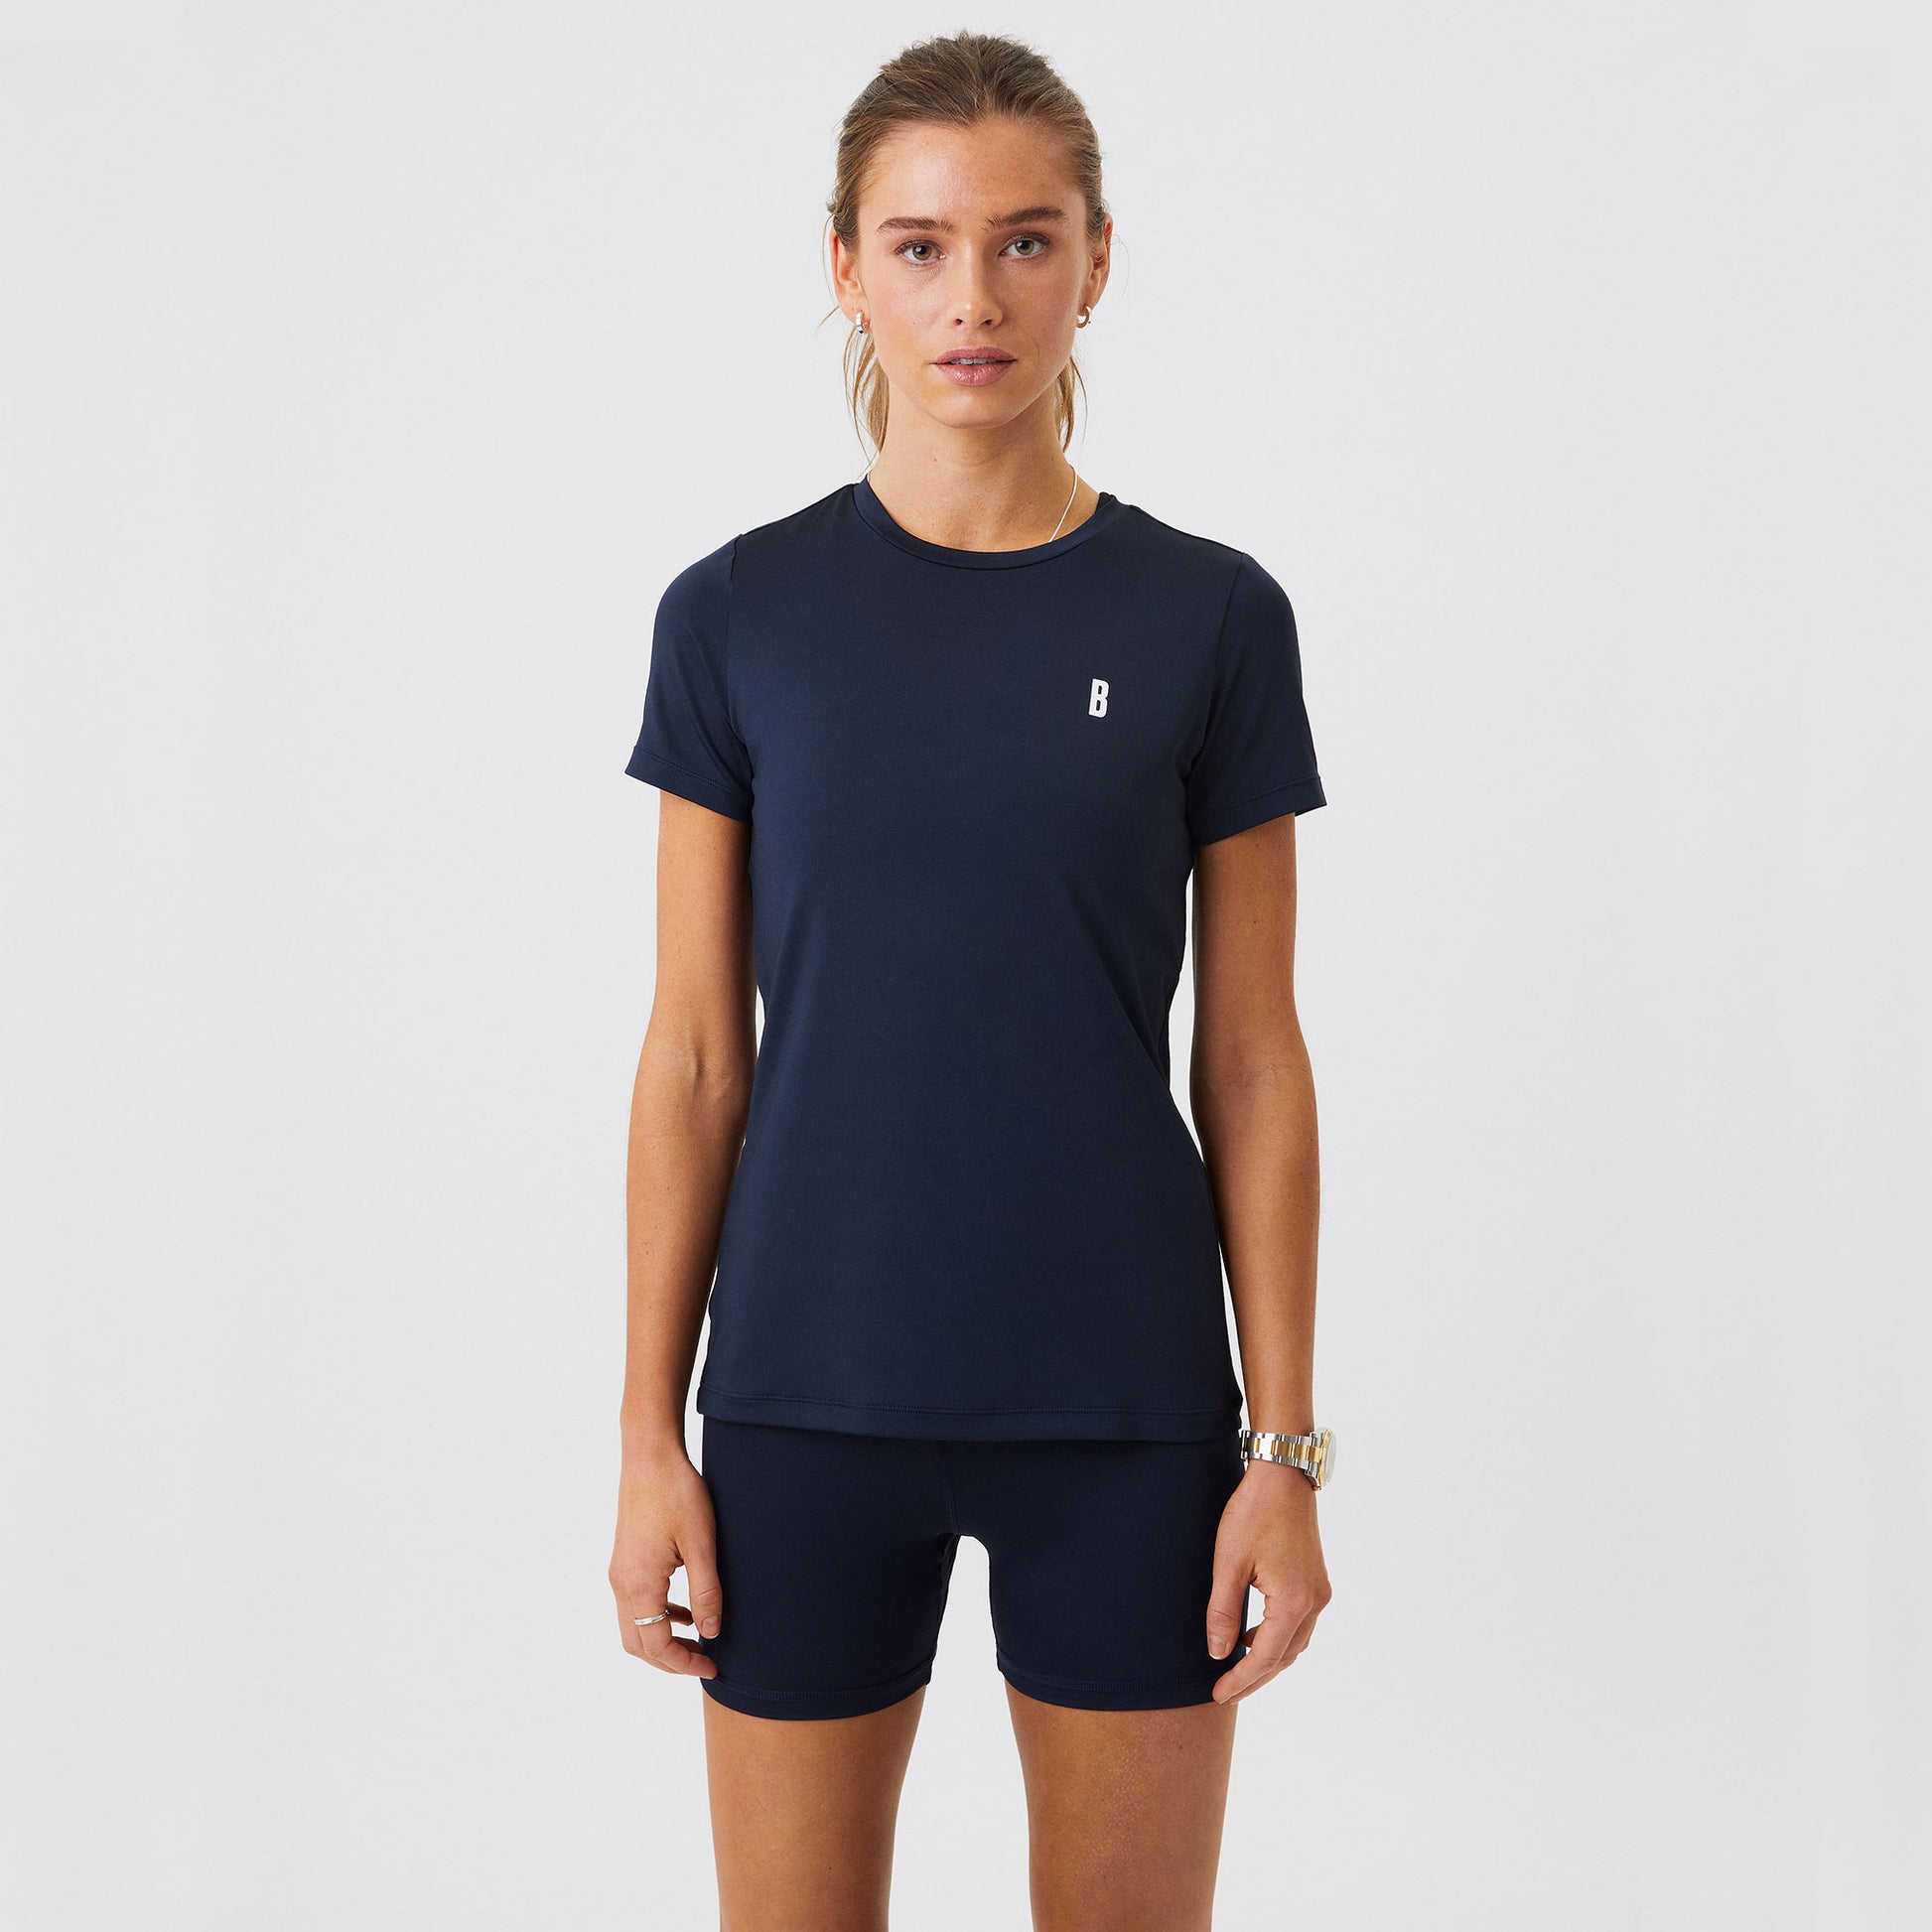 Björn Borg Ace Women's Slim Tennis Shirt Dark Blue (4)